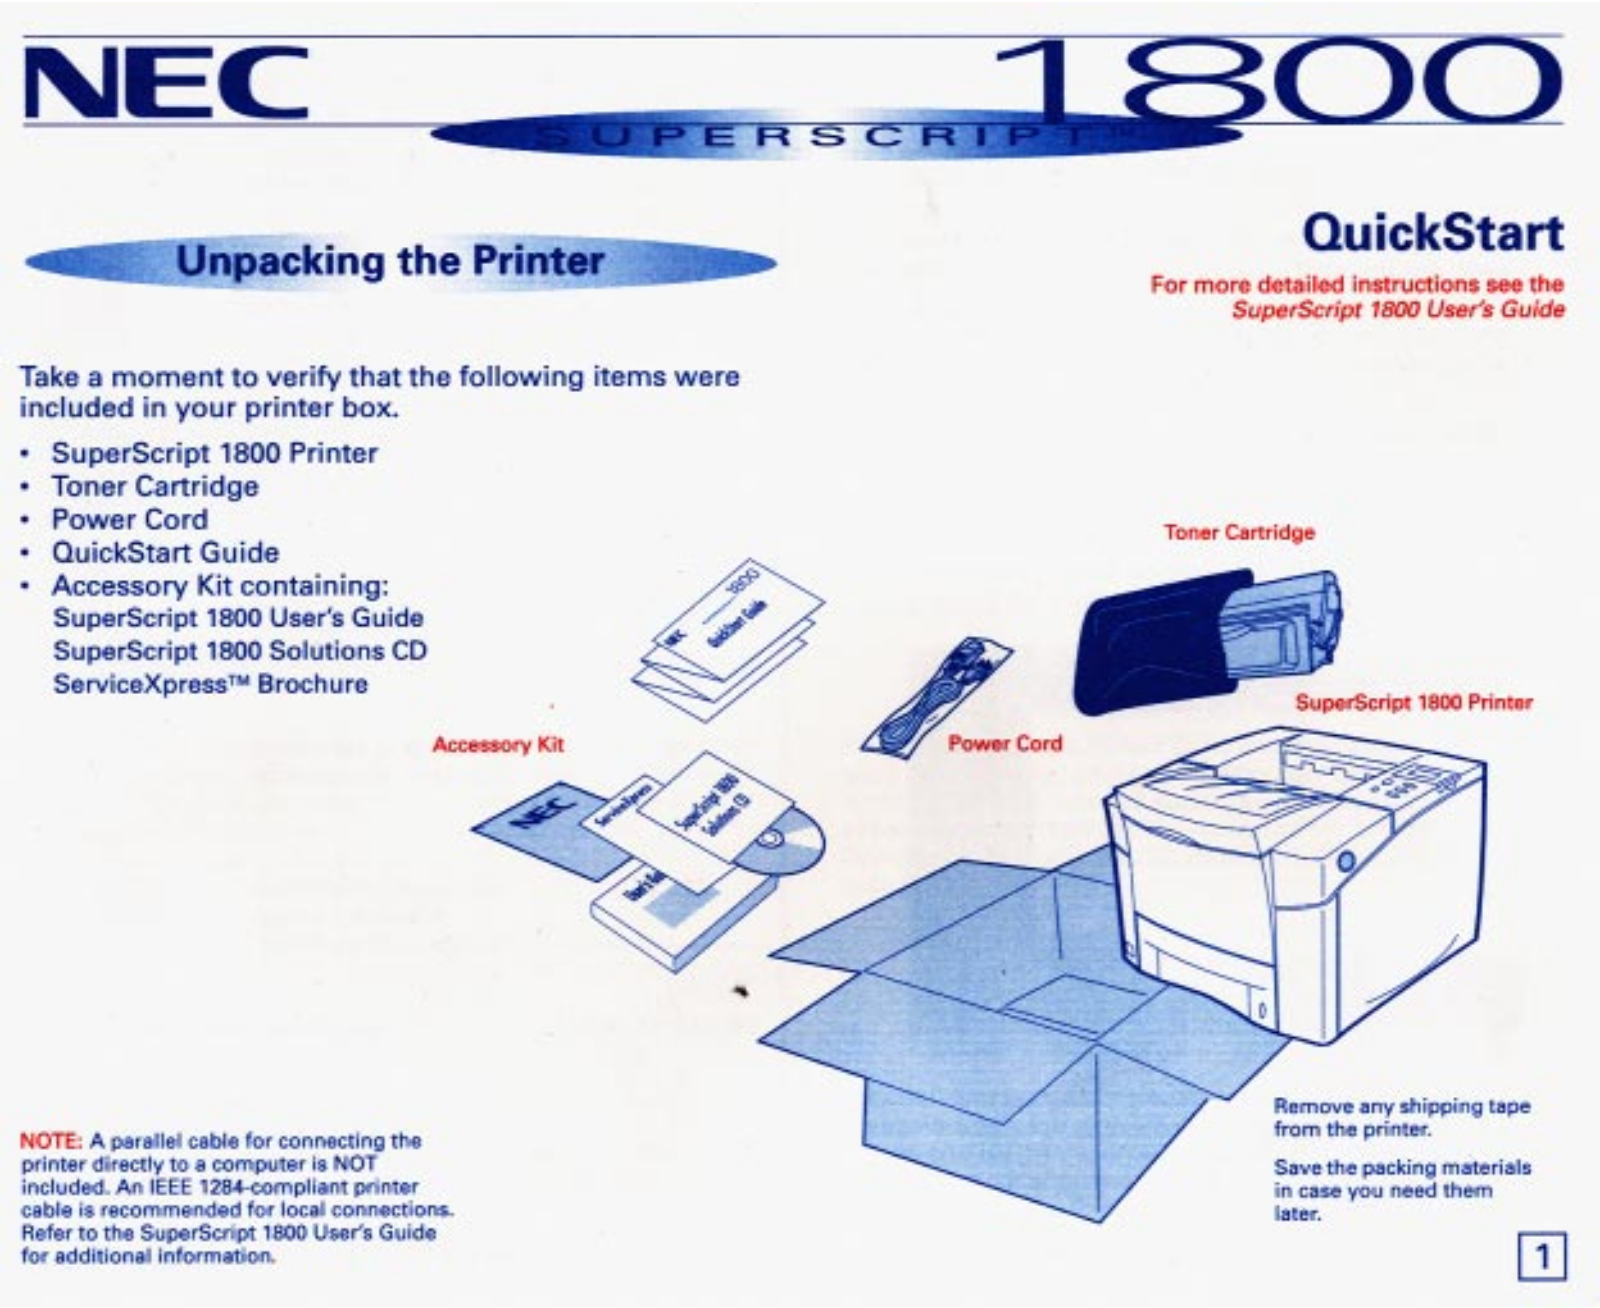 NEC SuperScript 1800 Quick Start Guide